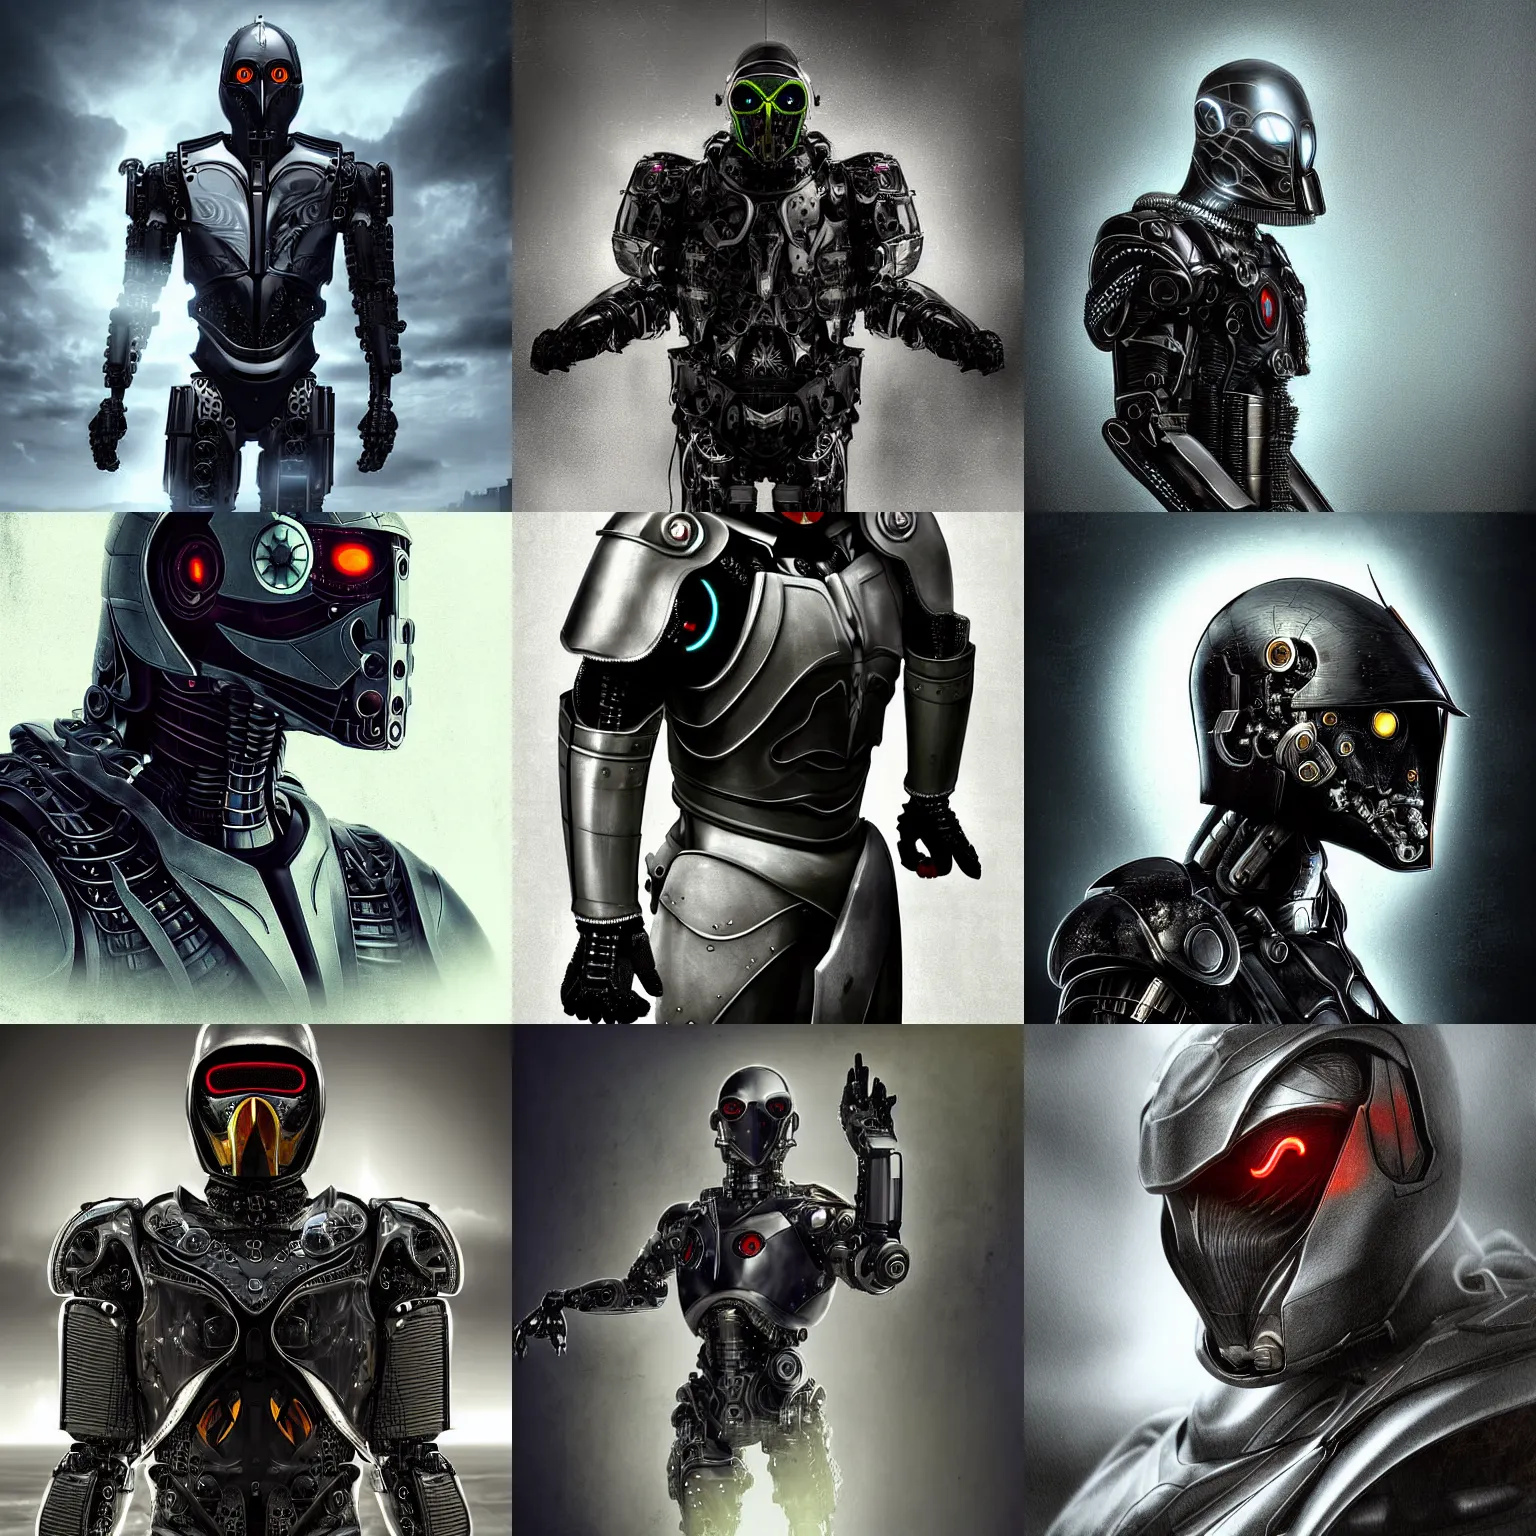 Prompt: cyborg crow in cybernetoc armour, portrait, digital art, studio, realistic reflections, ominous lighting, photorealistic render